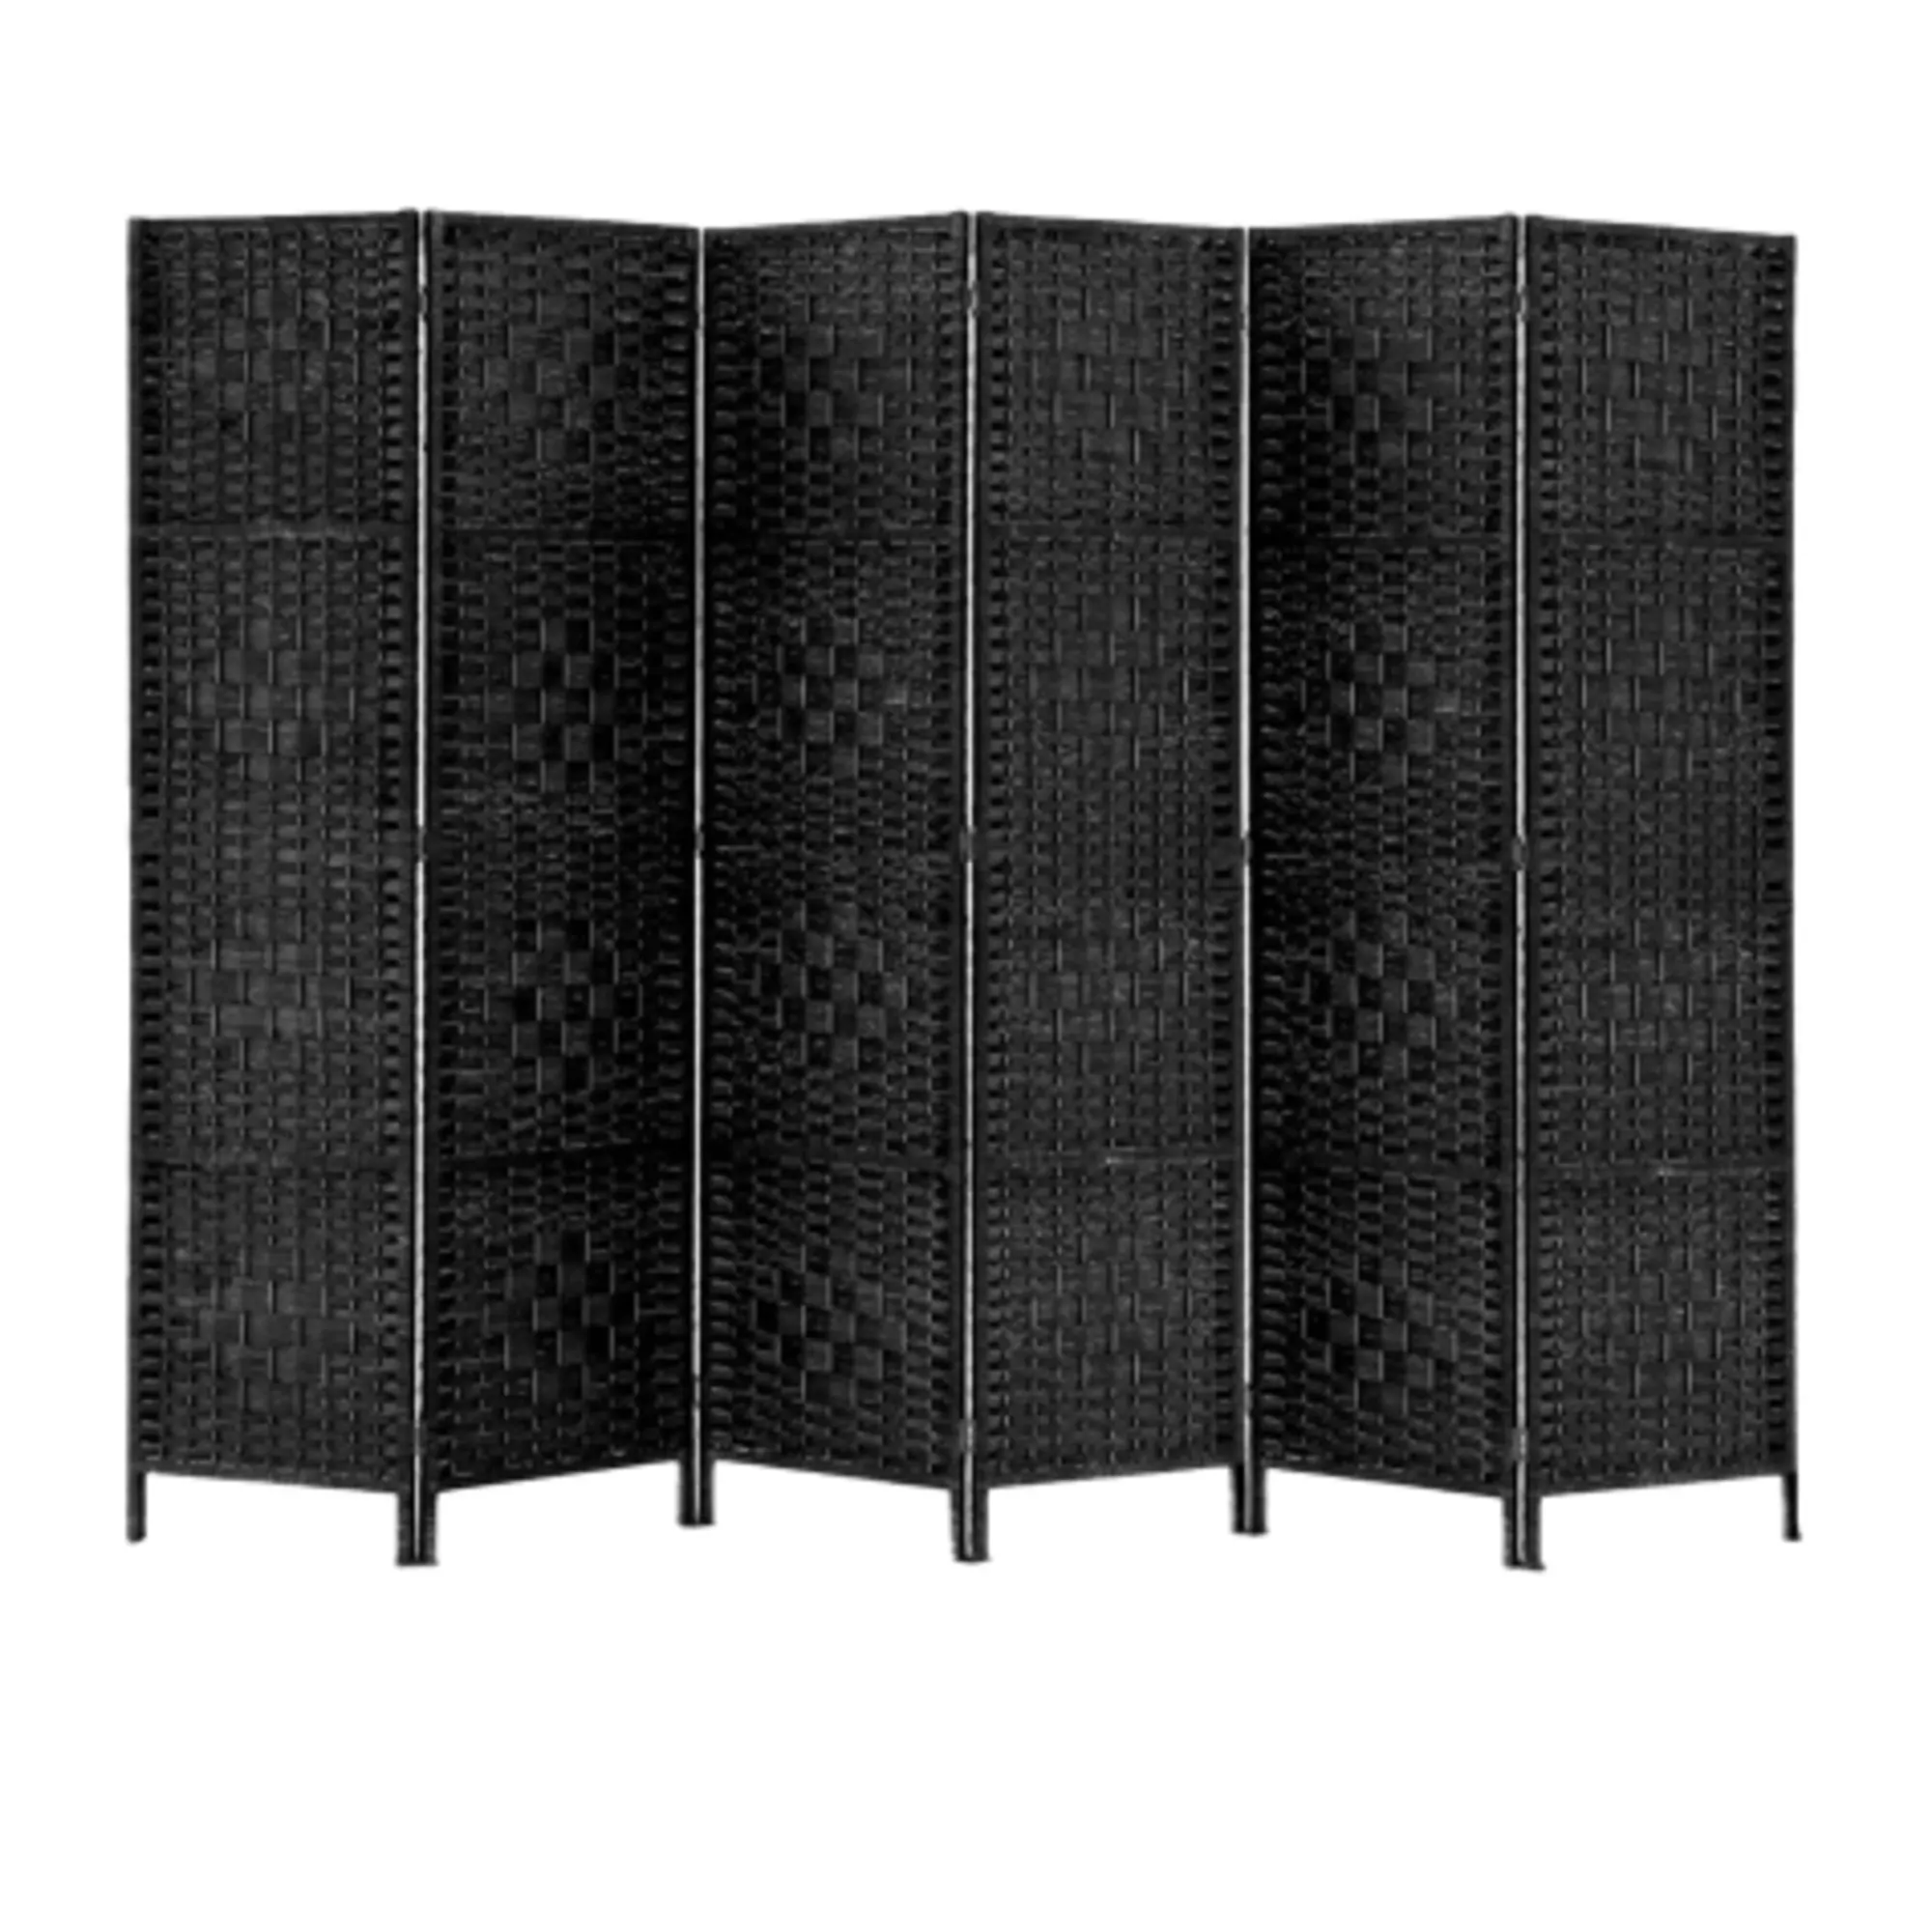 Artiss 6 Panel Rattan Room Divider Black Image 1